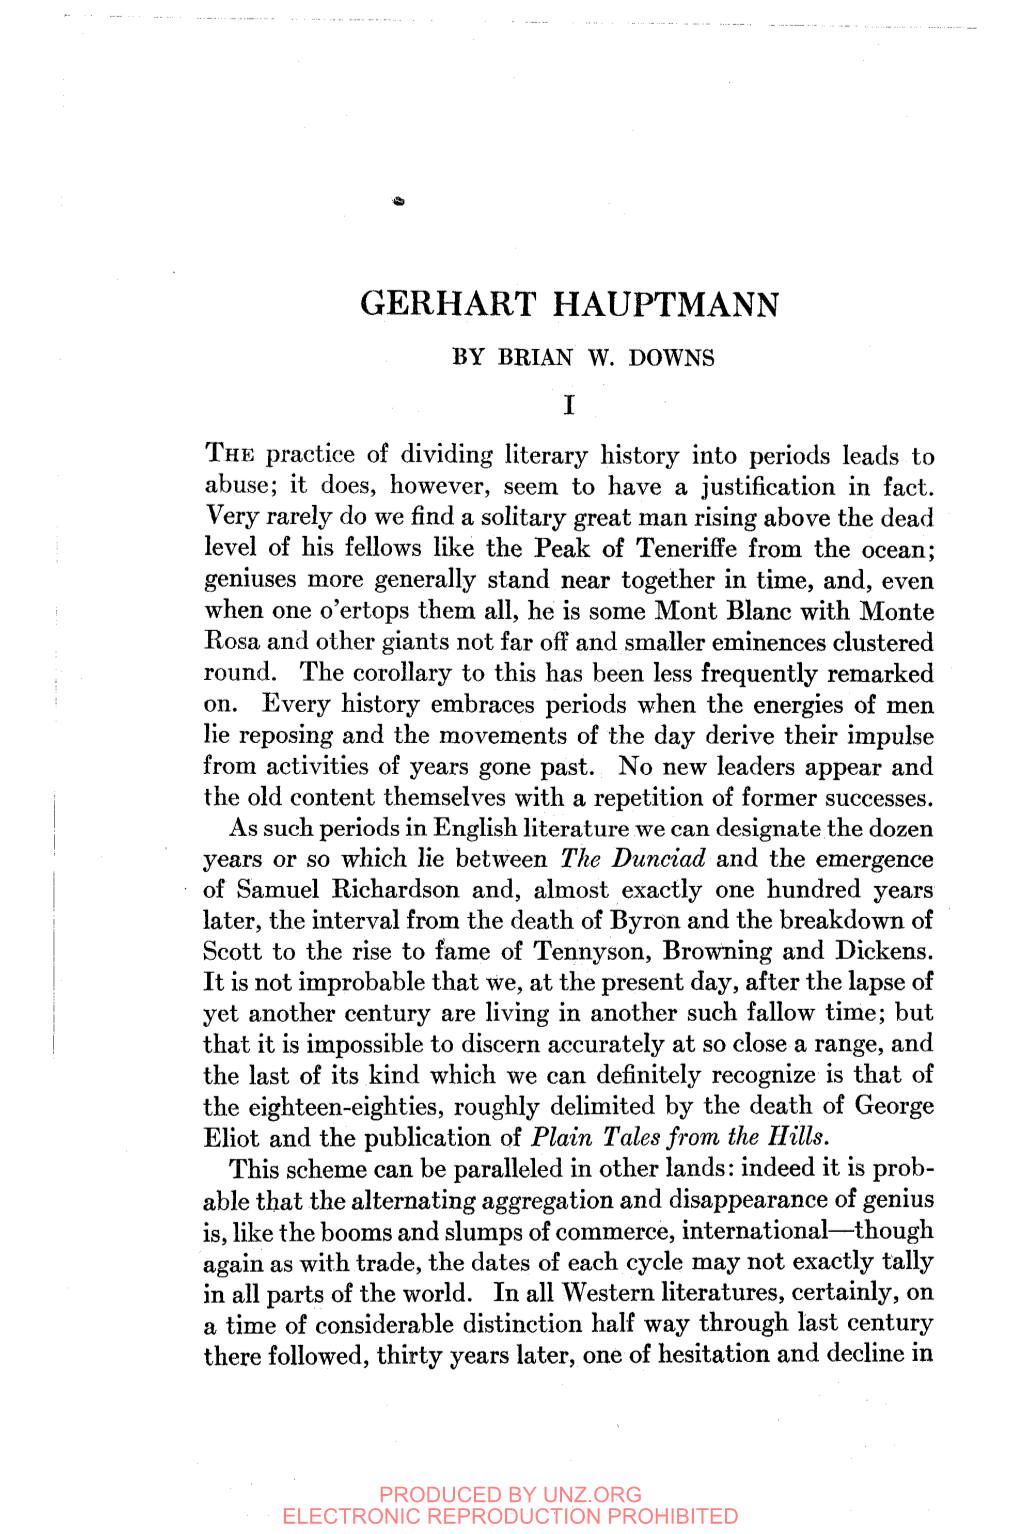 Gerhart Hauptmann by Brian W